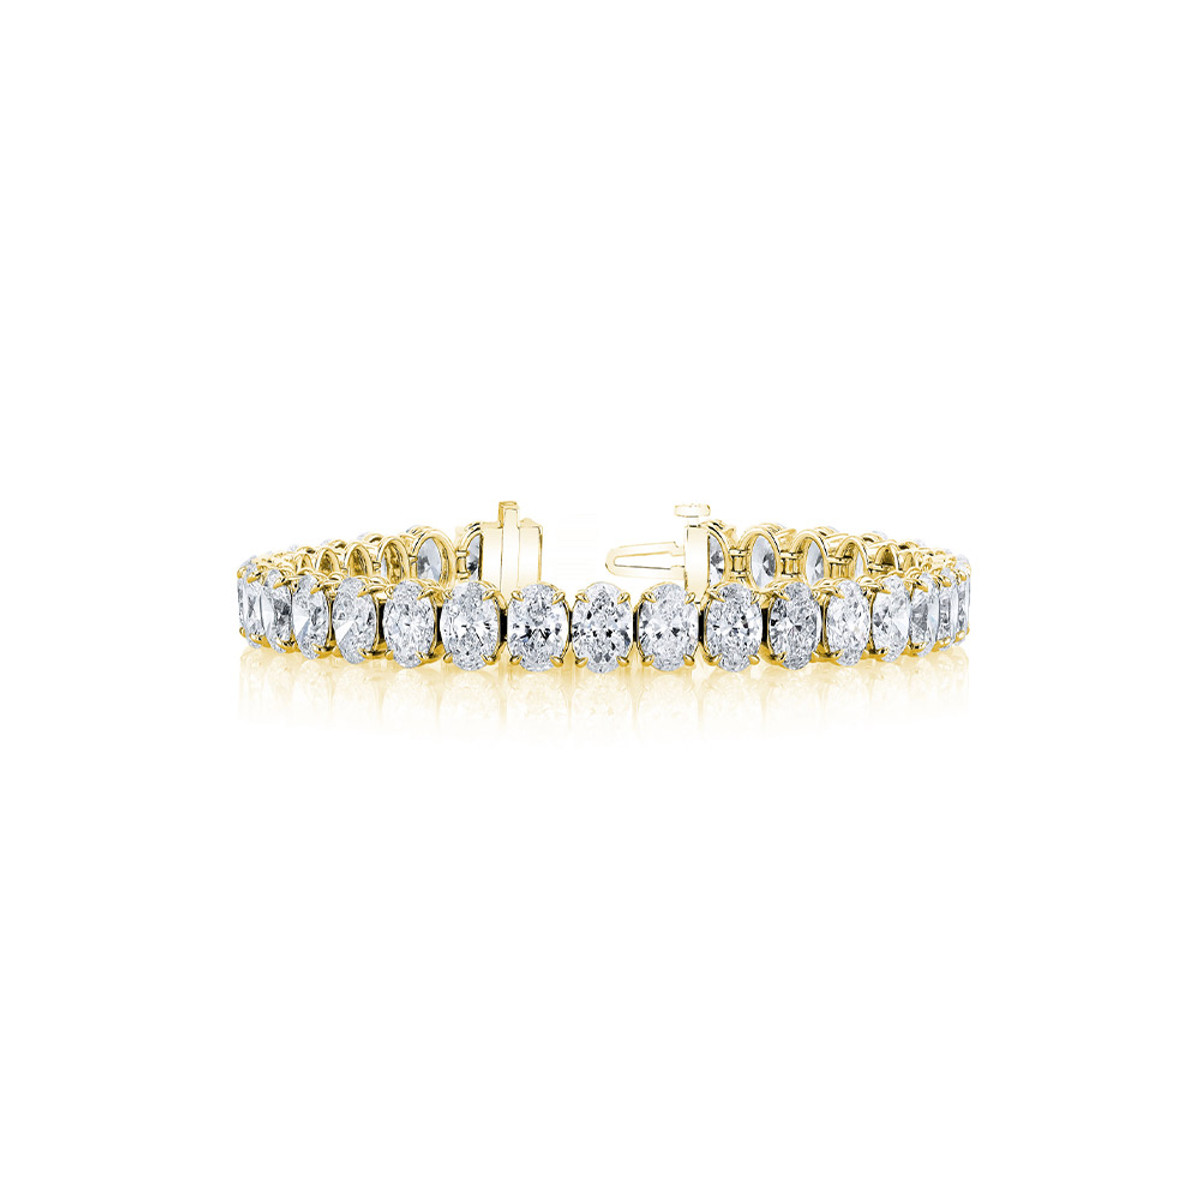 Hyde Park Collection 18K Yellow Gold Diamond Line Bracelet-59711 Product Image